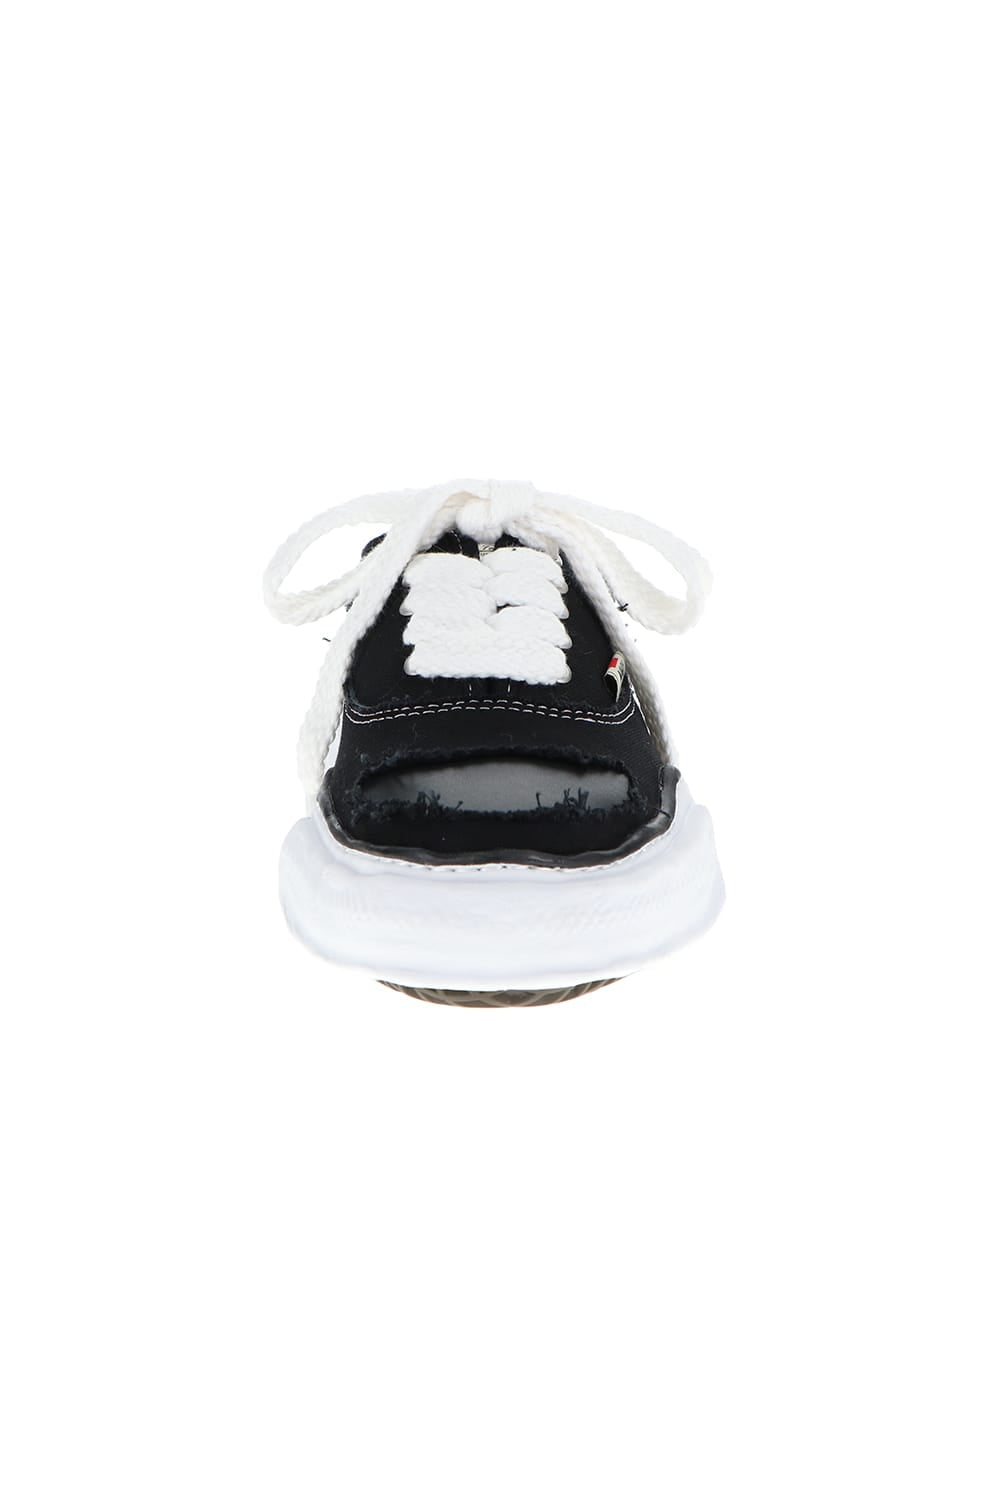 -BAKER- Original sole broken canvas Low-Top sneakers Black